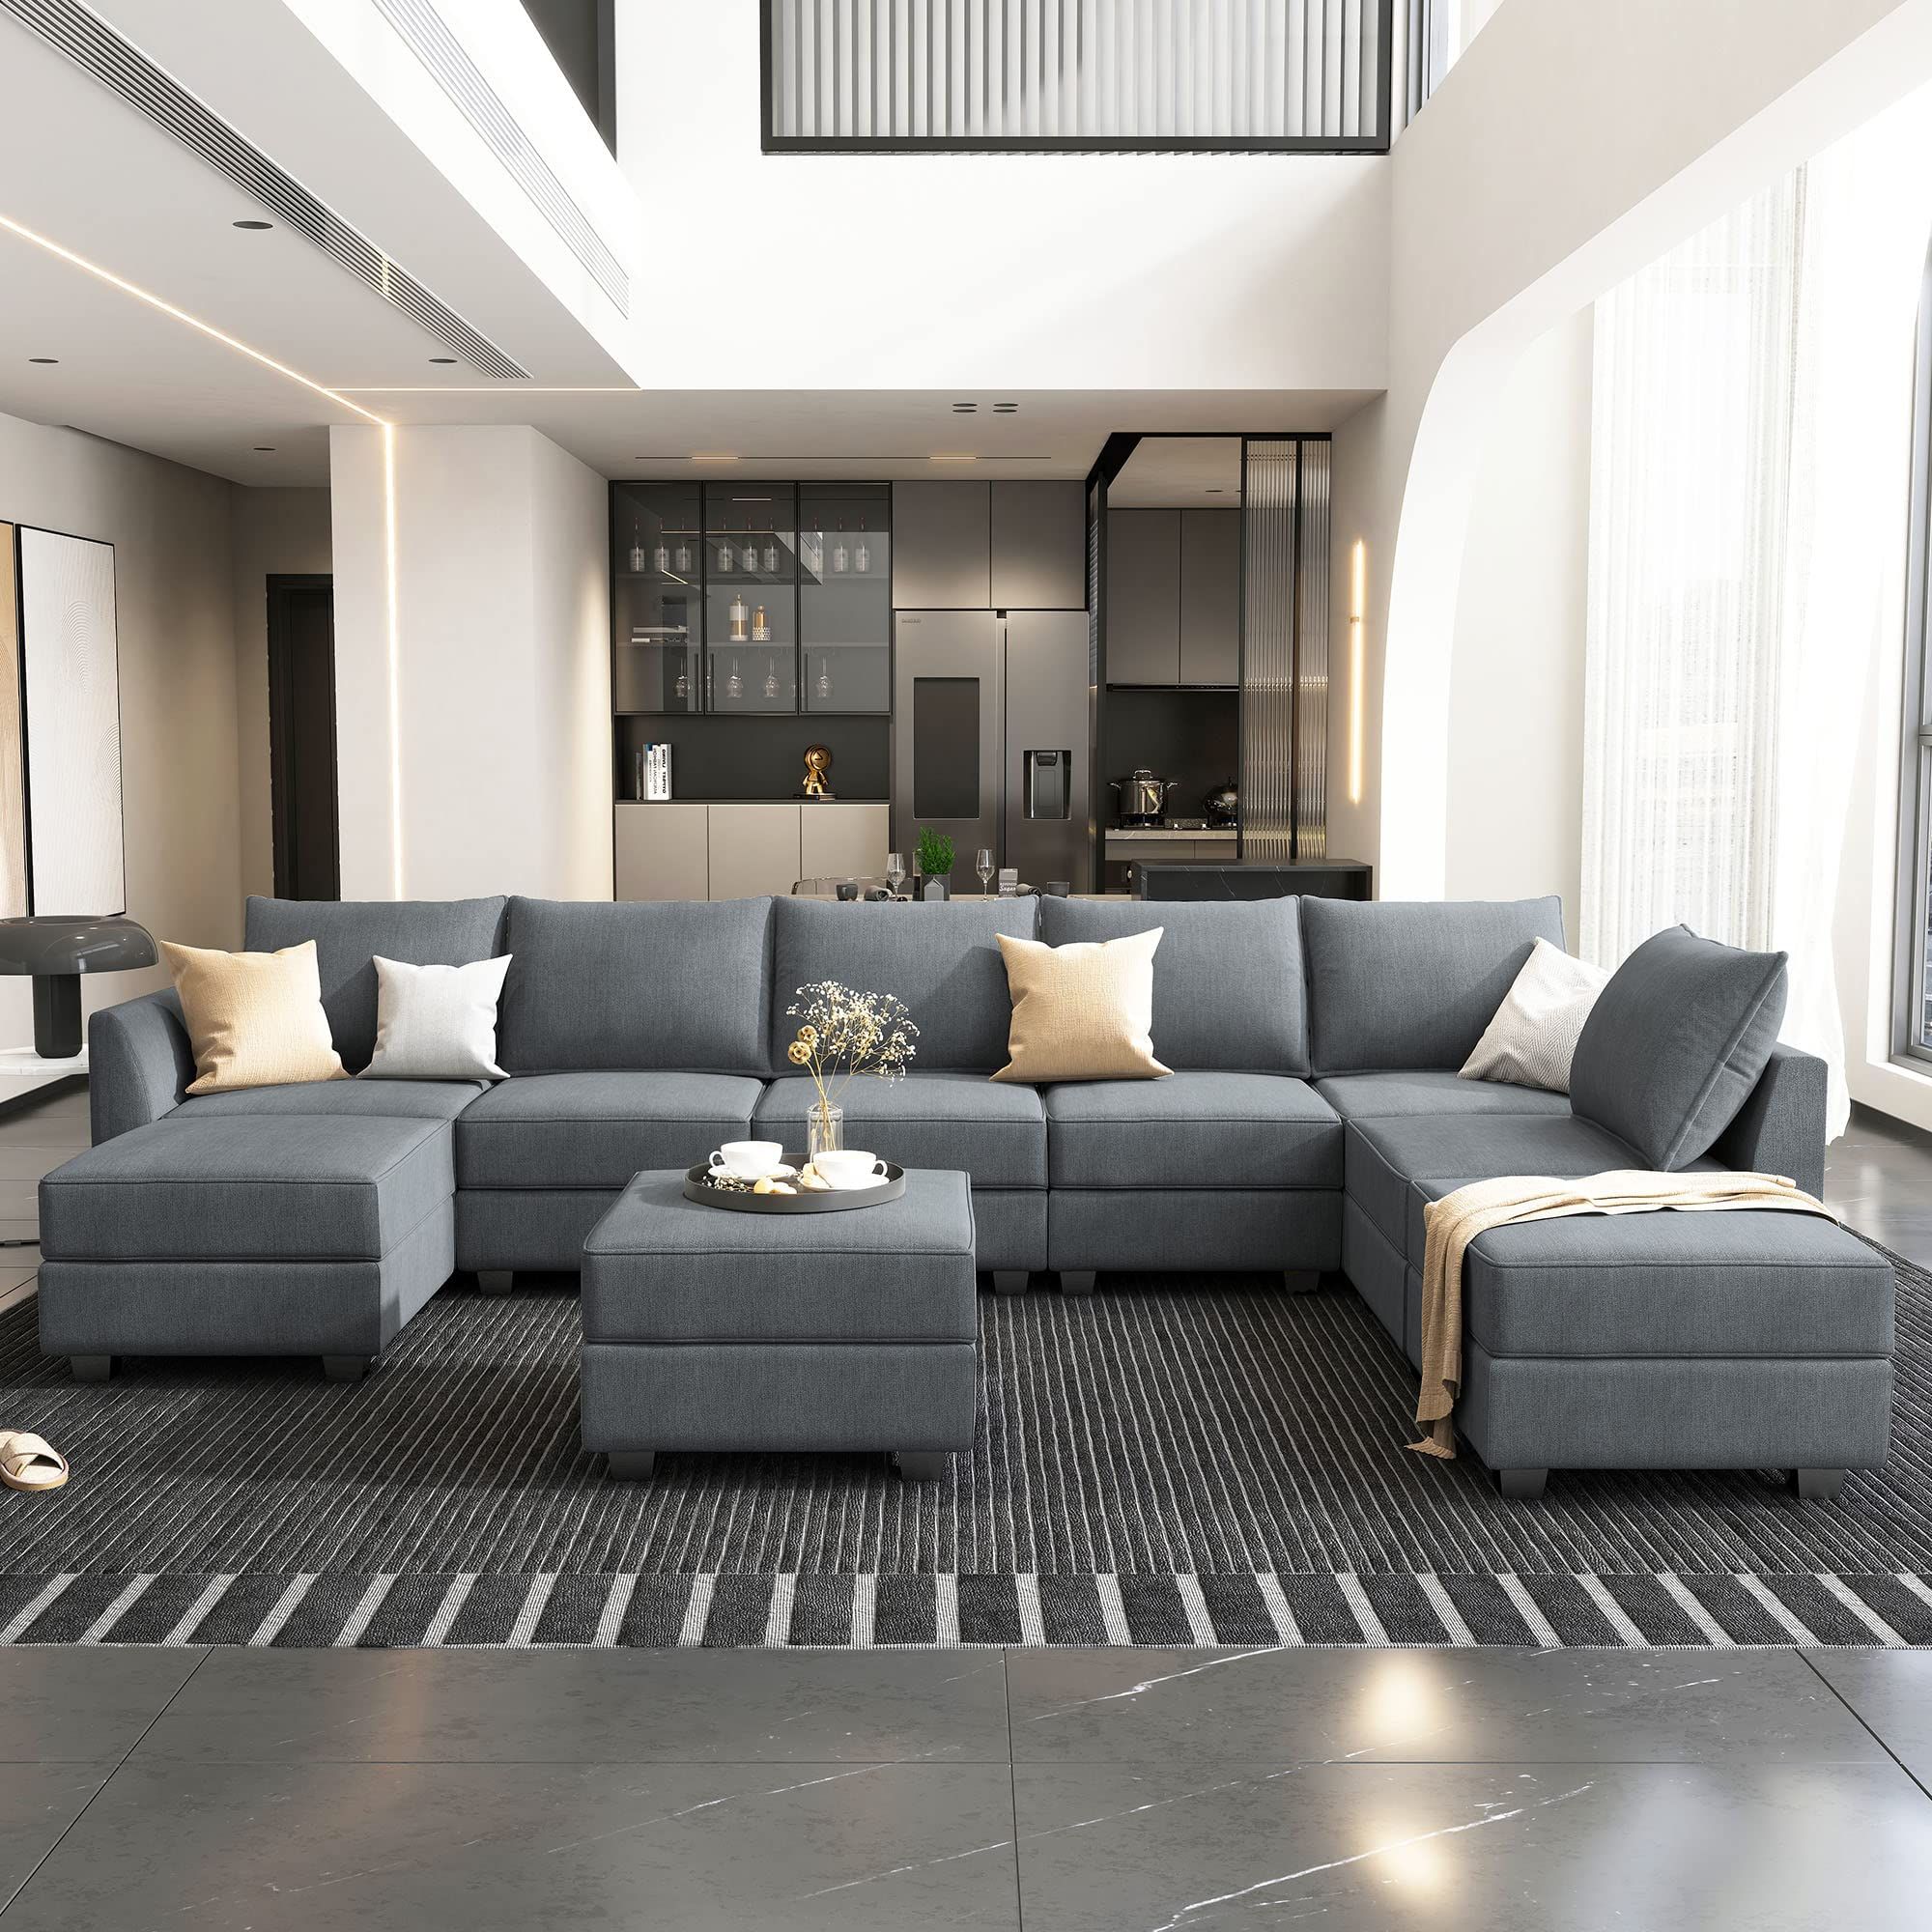 Seating furniture – sectional sofa
sleeper